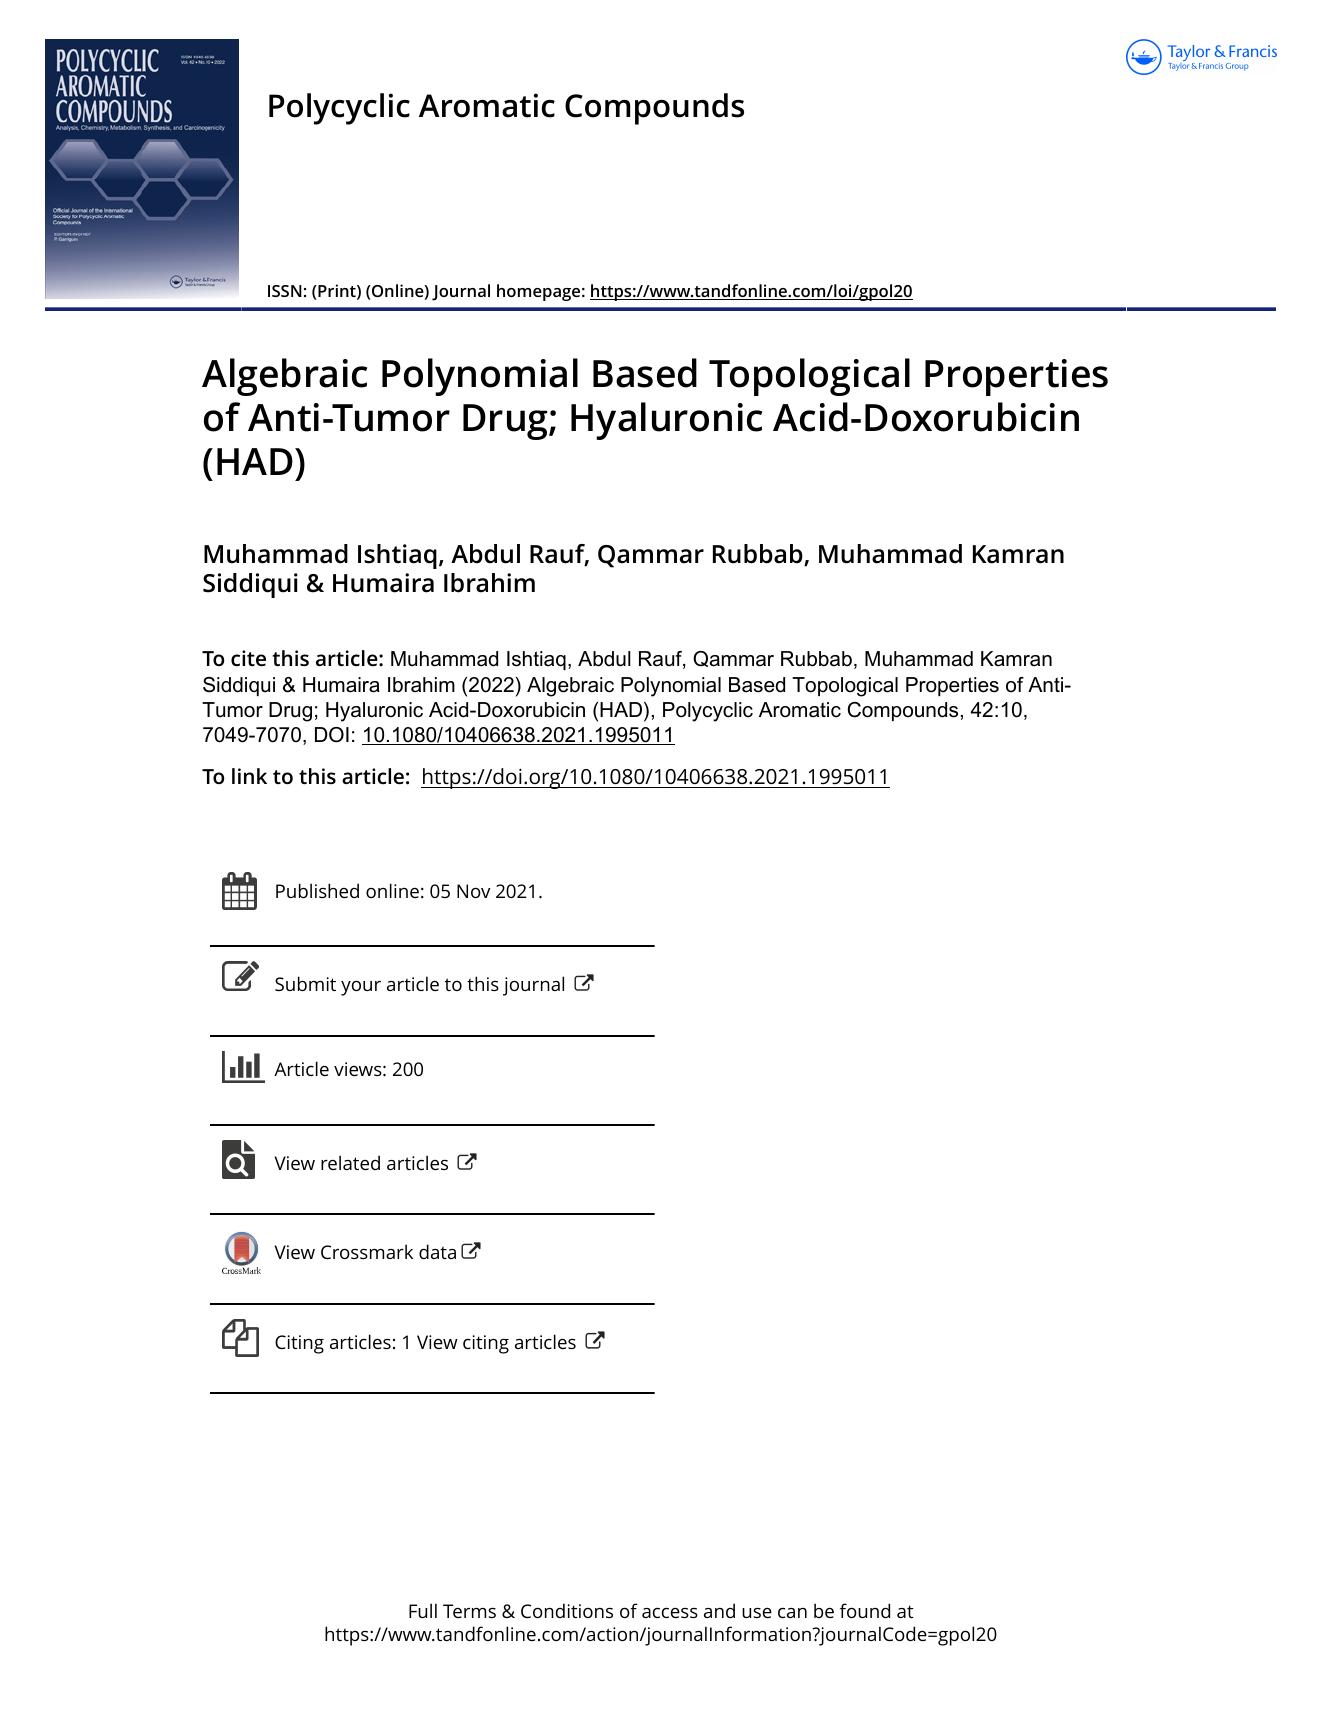 Algebraic Polynomial Based Topological Properties of Anti-Tumor Drug; Hyaluronic Acid-Doxorubicin (HAD) by Ishtiaq Muhammad & Rauf Abdul & Rubbab Qammar & Siddiqui Muhammad Kamran & Ibrahim Humaira